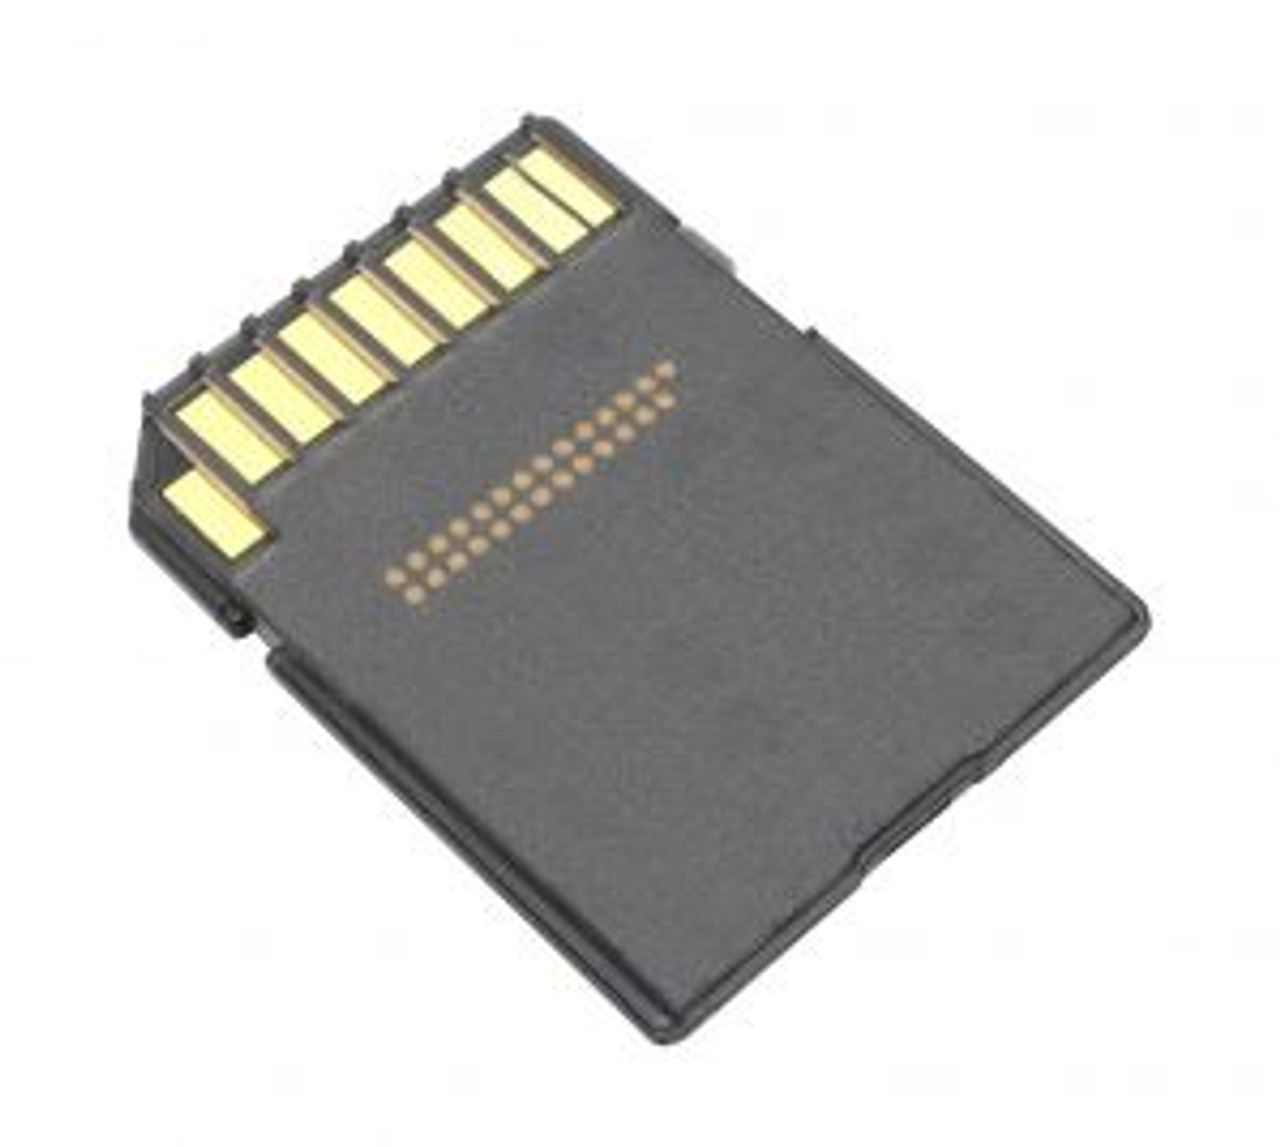 E-002-0300 SuperMicro 512MB CompactFlash (CF) Memory Card